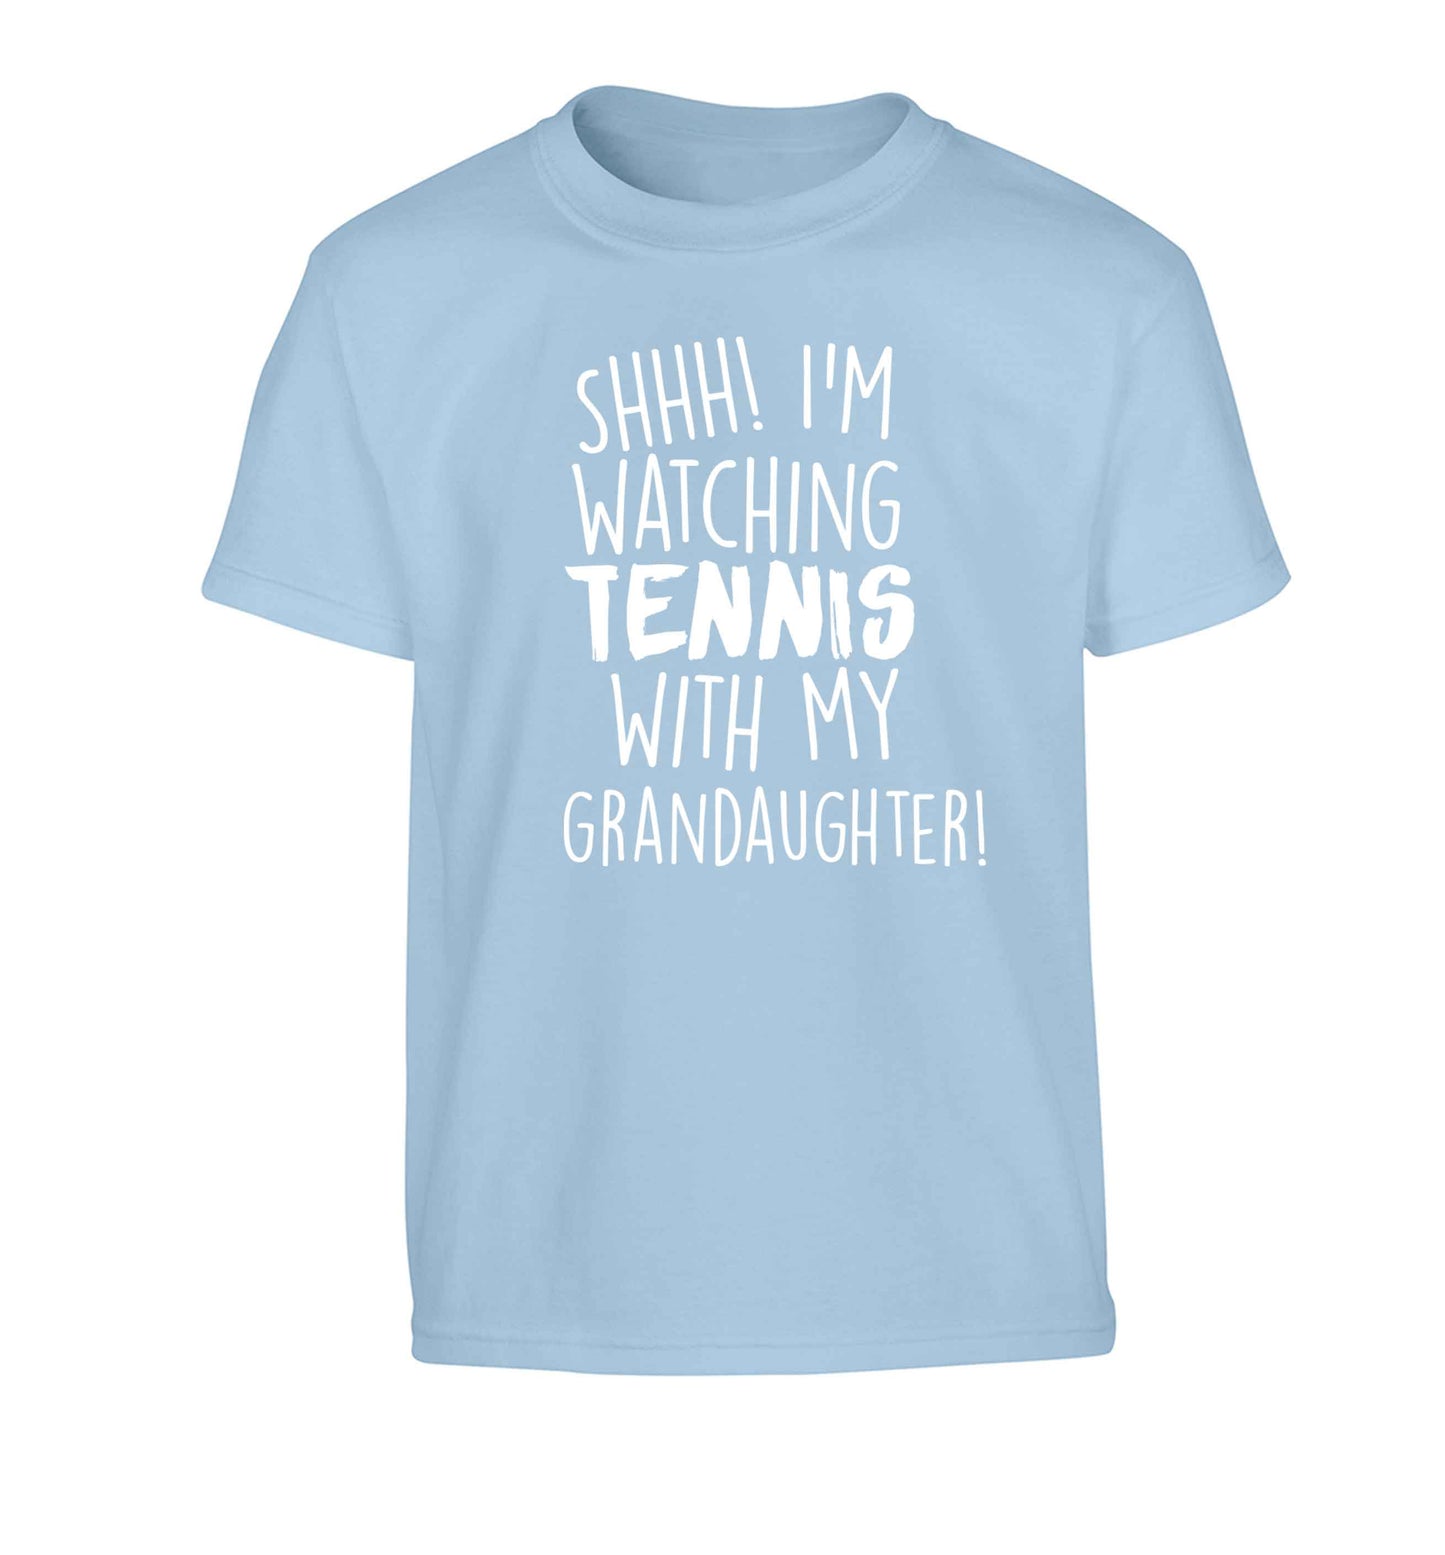 Shh! I'm watching tennis with my granddaughter! Children's light blue Tshirt 12-13 Years